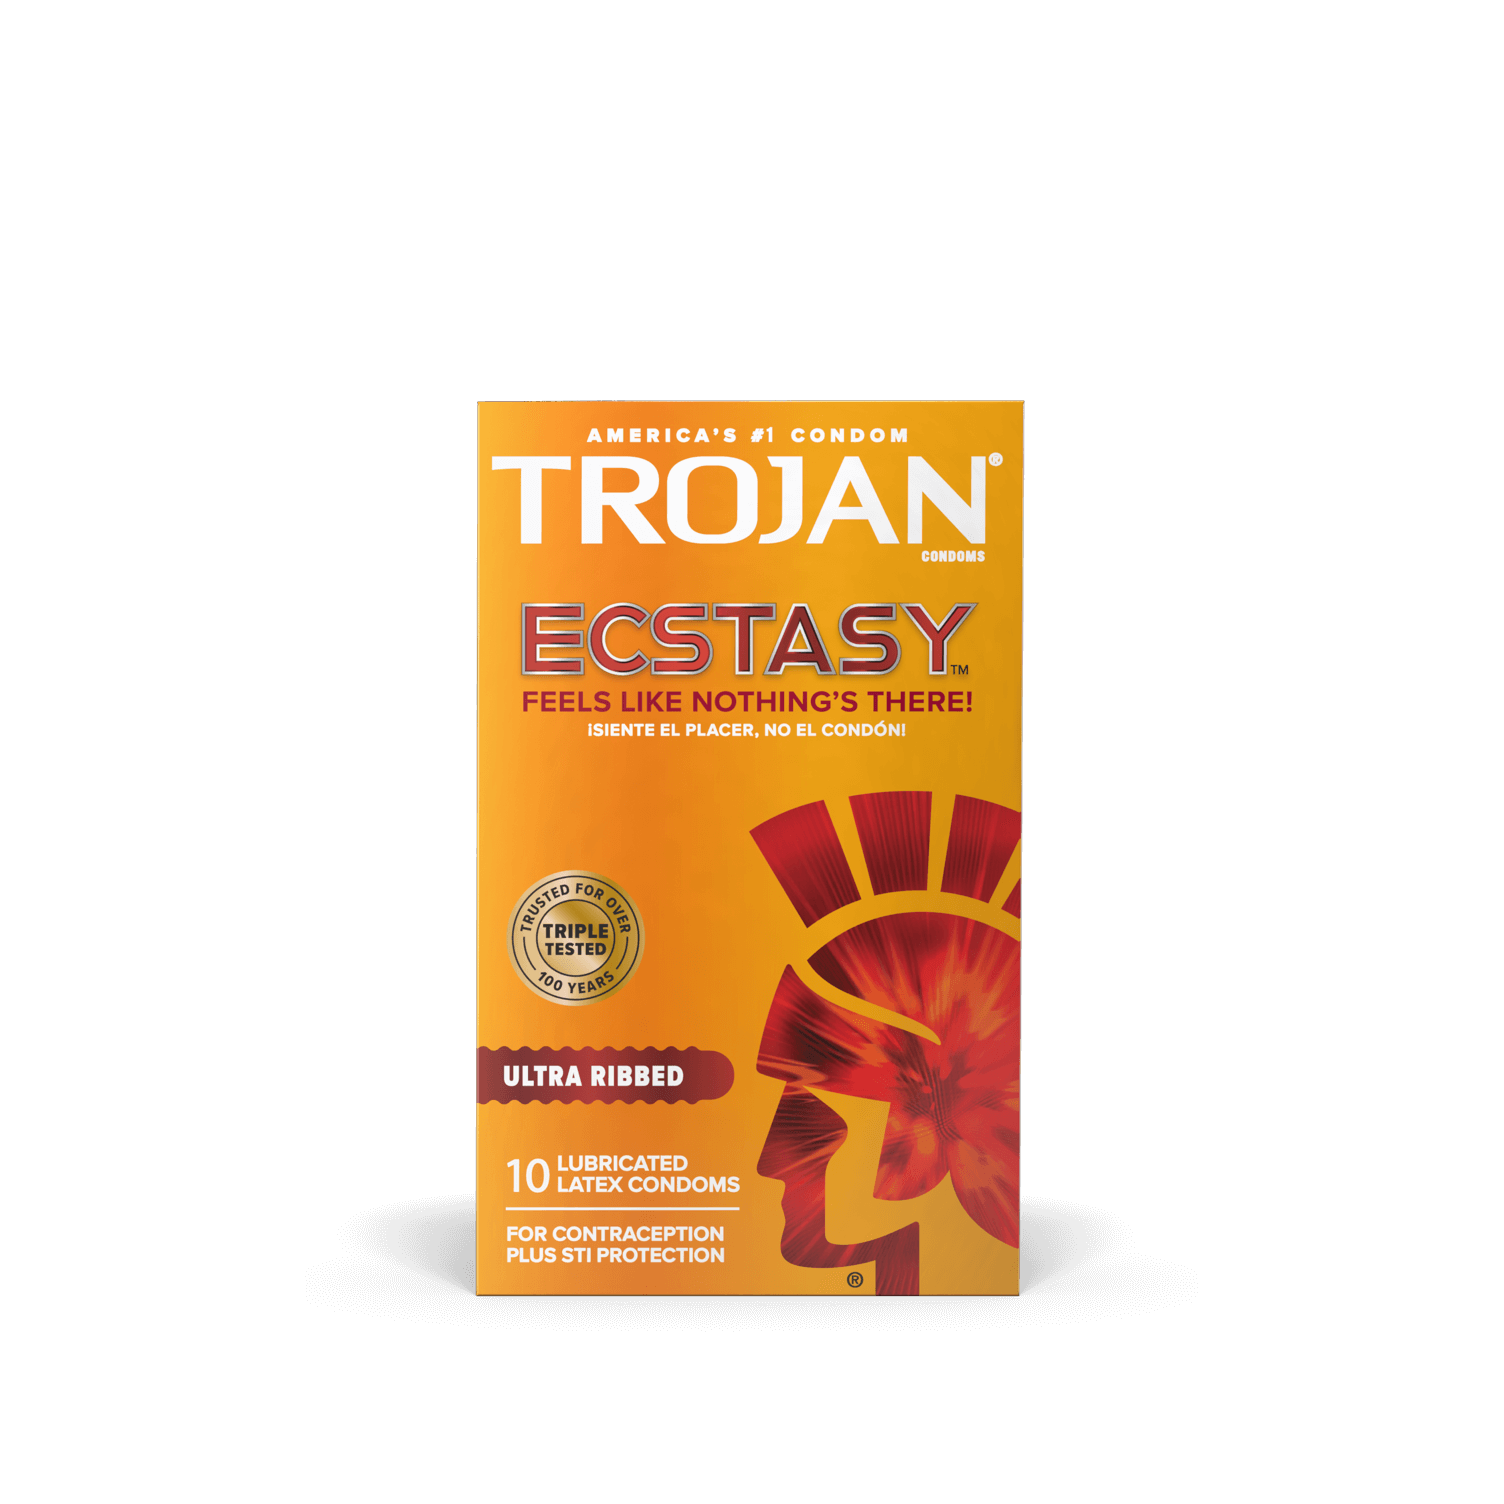 Trojan Ecstasy Ultra Ribbed Condoms.